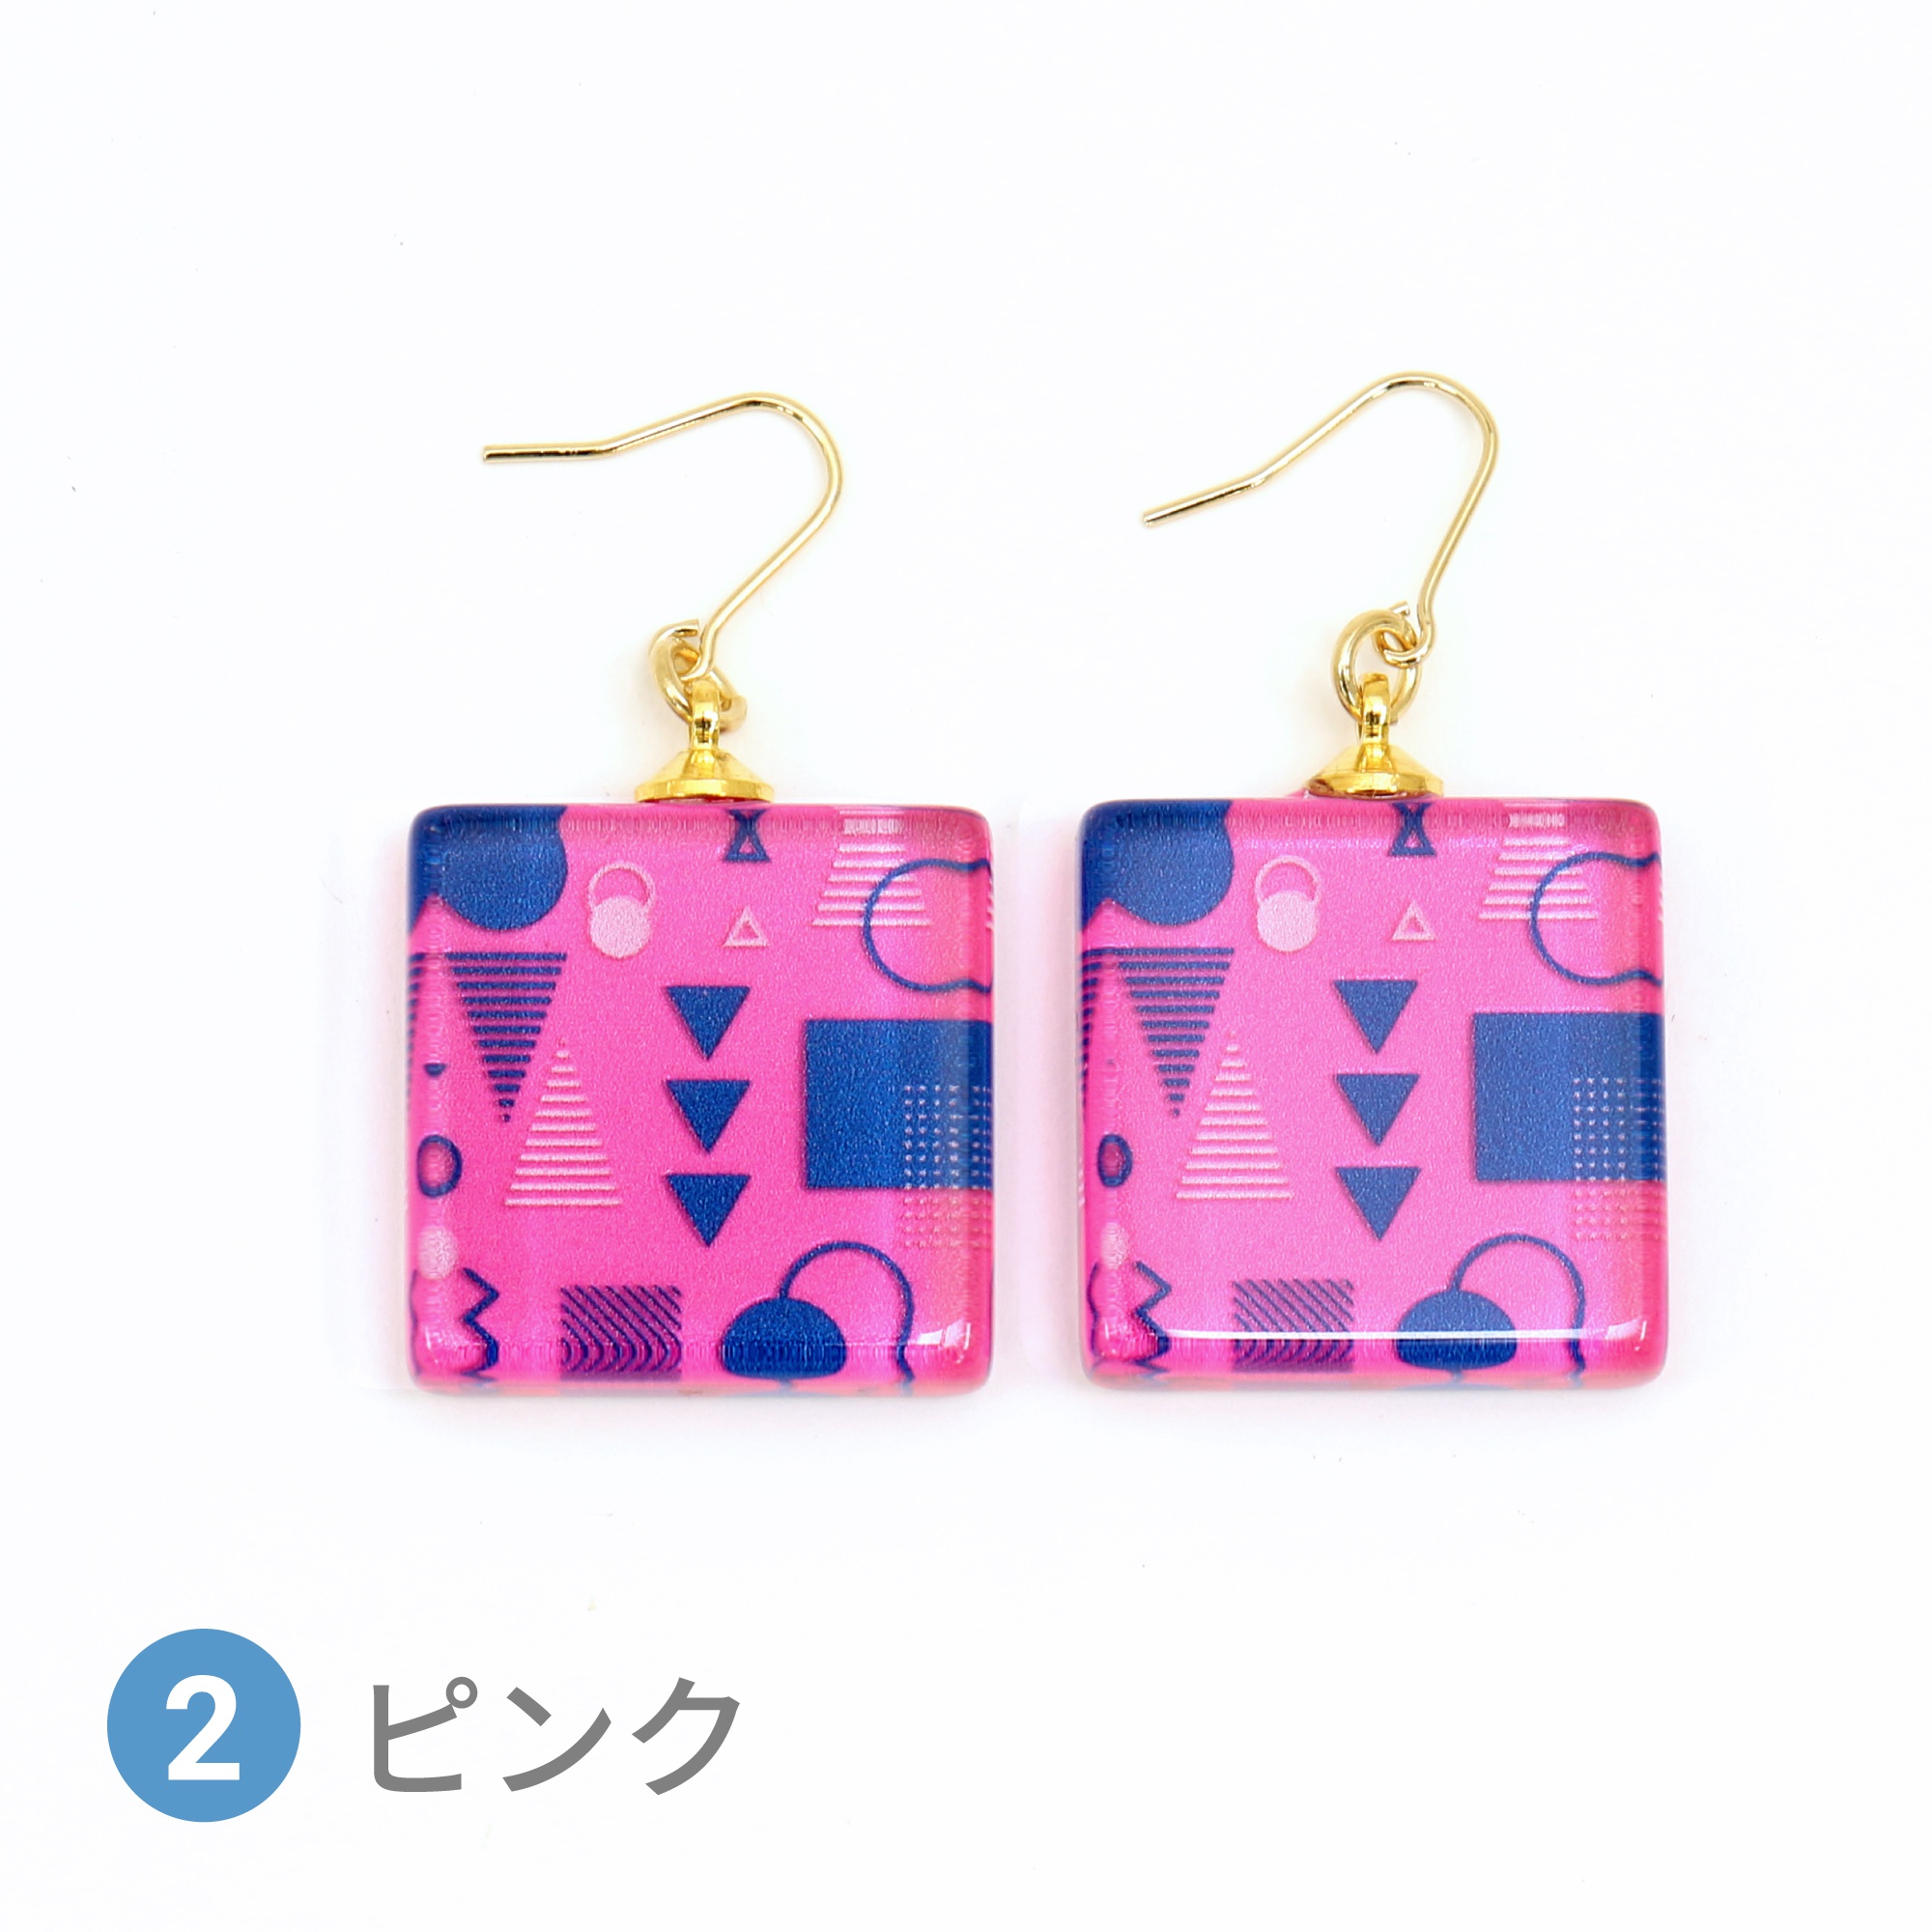 Glass accessories Pierced Earring GEOMETRIC pink square shape